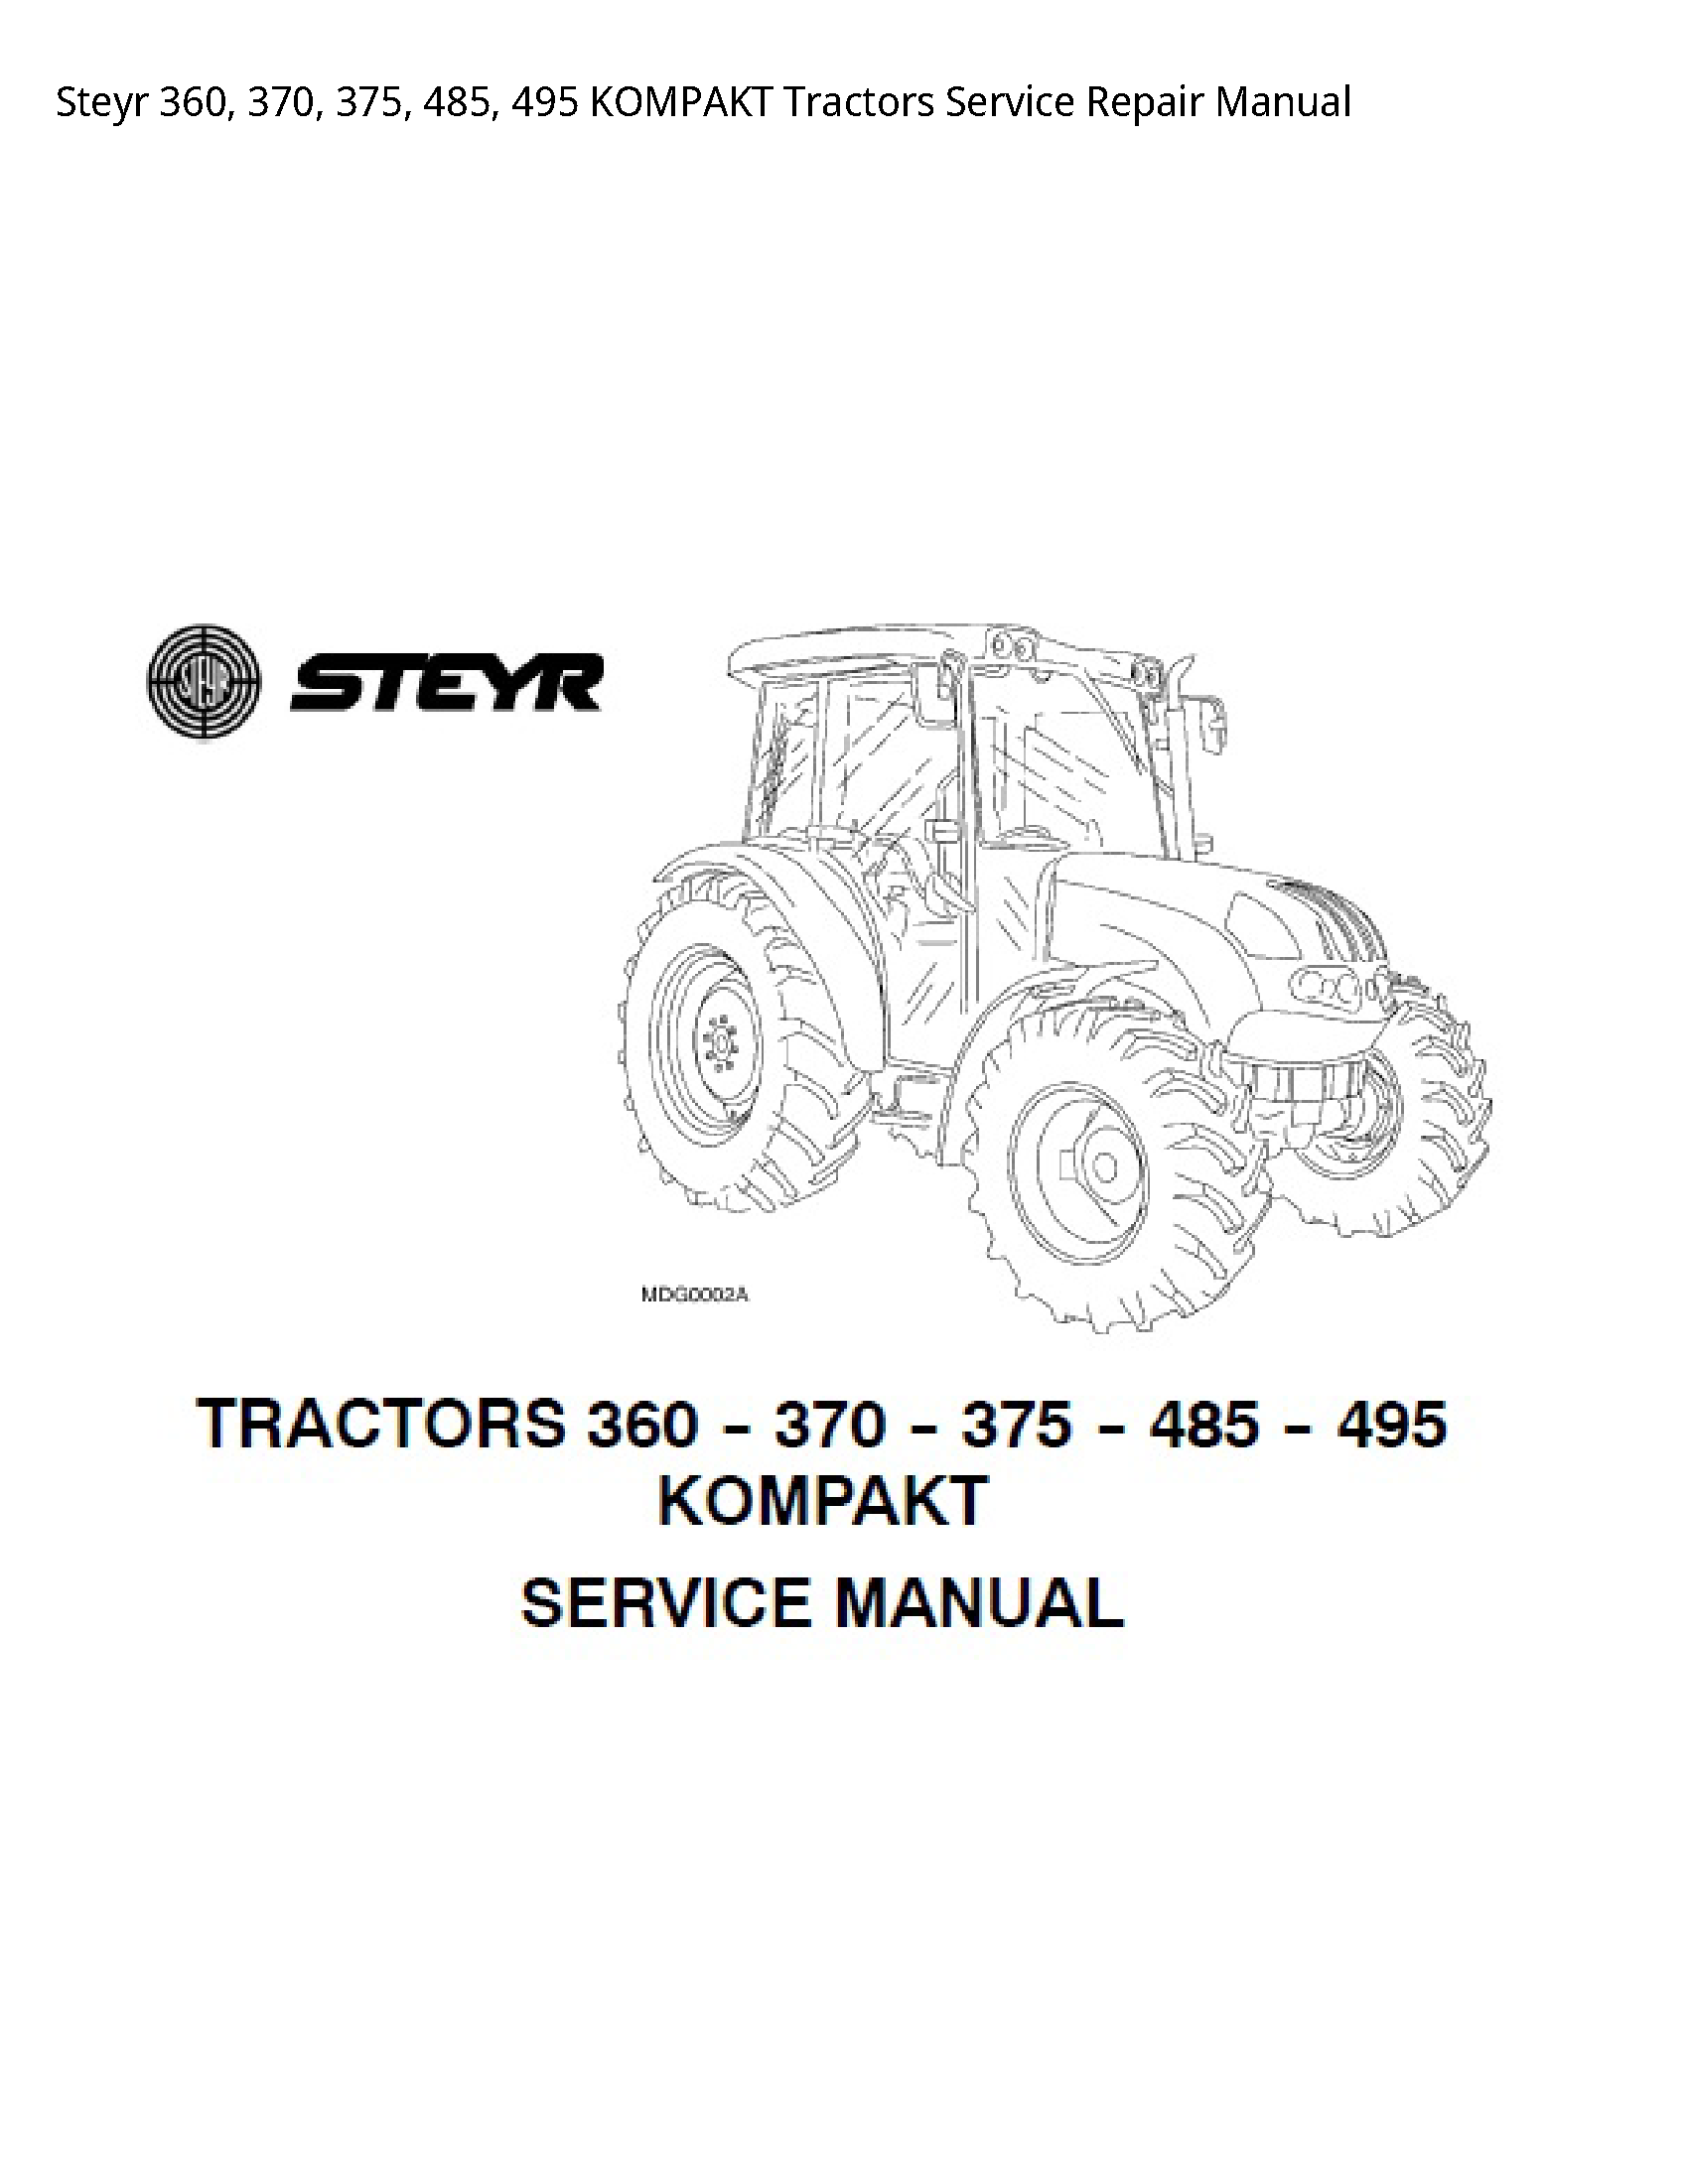 Steyr 360 KOMPAKT Tractors manual